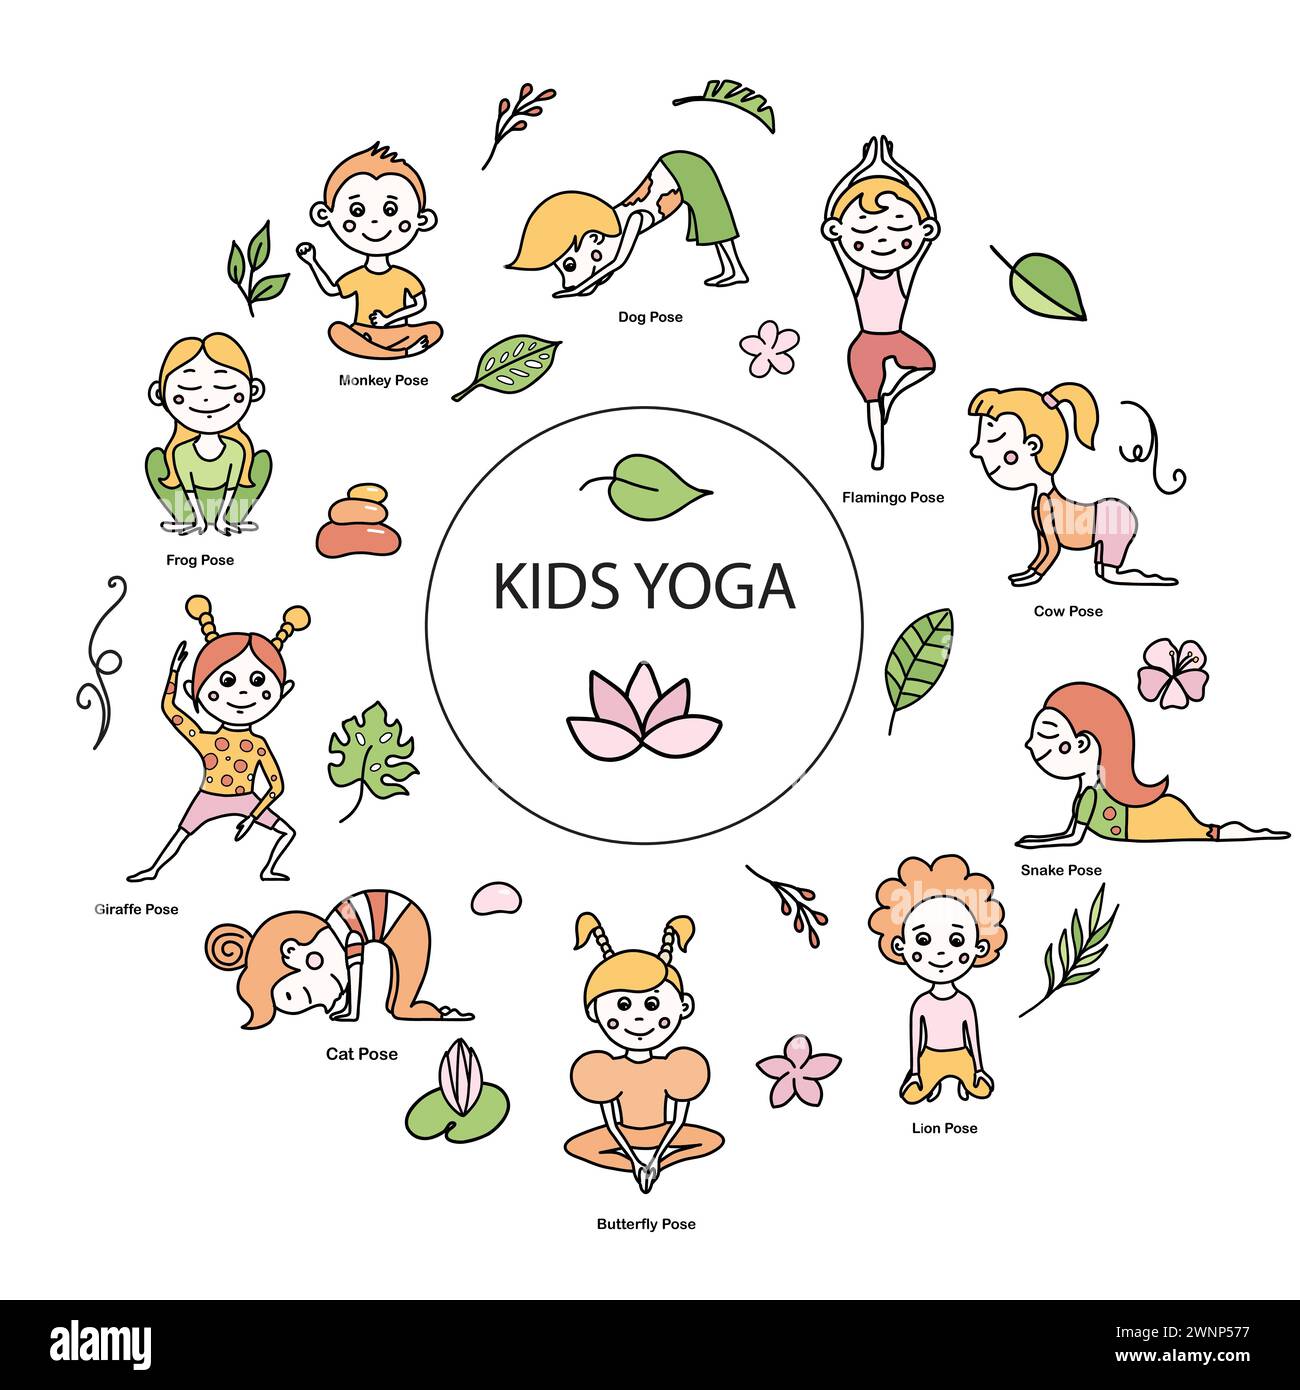 20 Animal Yoga Poses for Kids - Preschool Inspirations